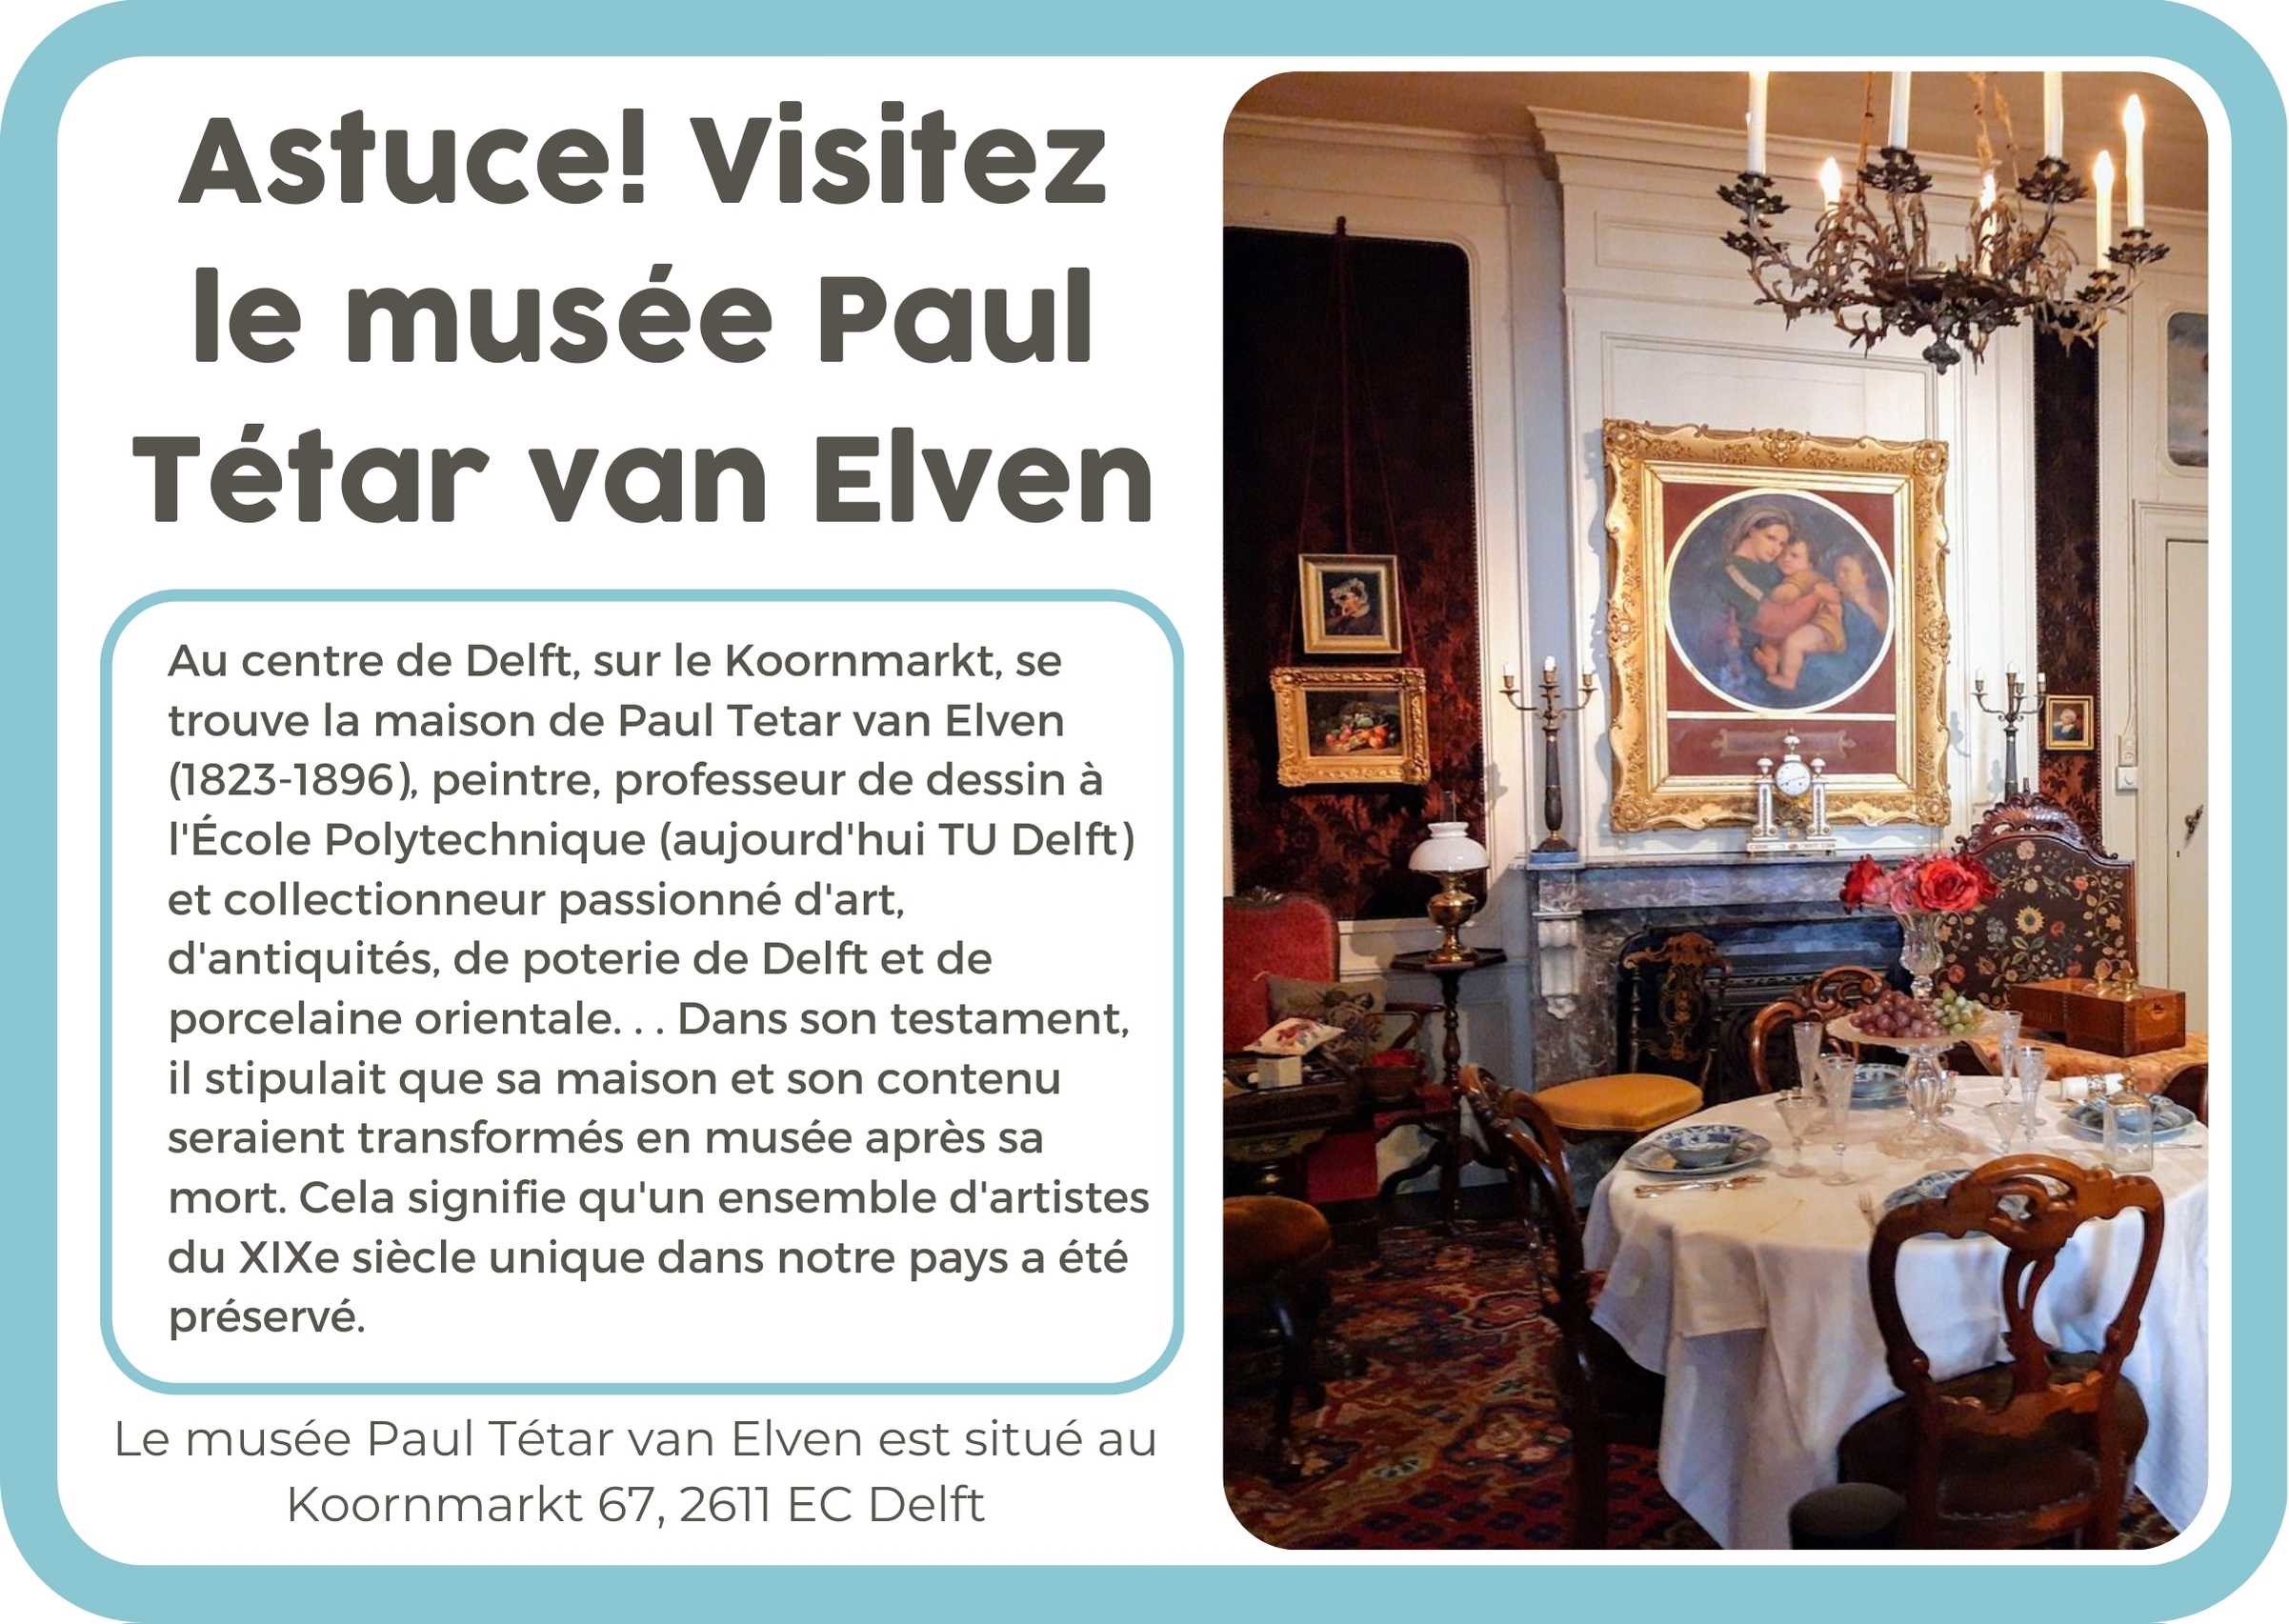 (Frans) 9. NL Paul tetar van Elvan